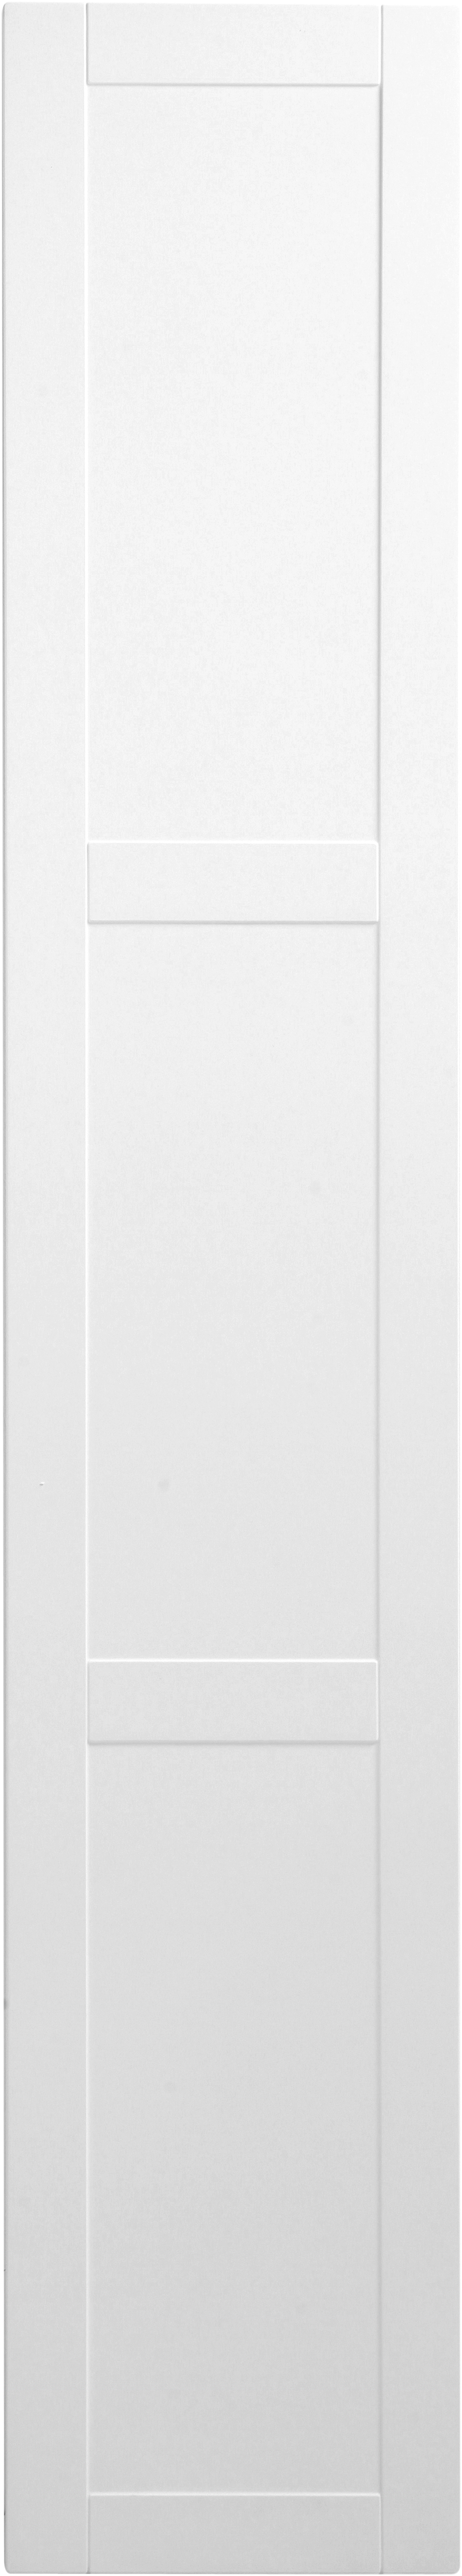 Puerta abatible para armario yakarta blanco 40x240x1,9 cm